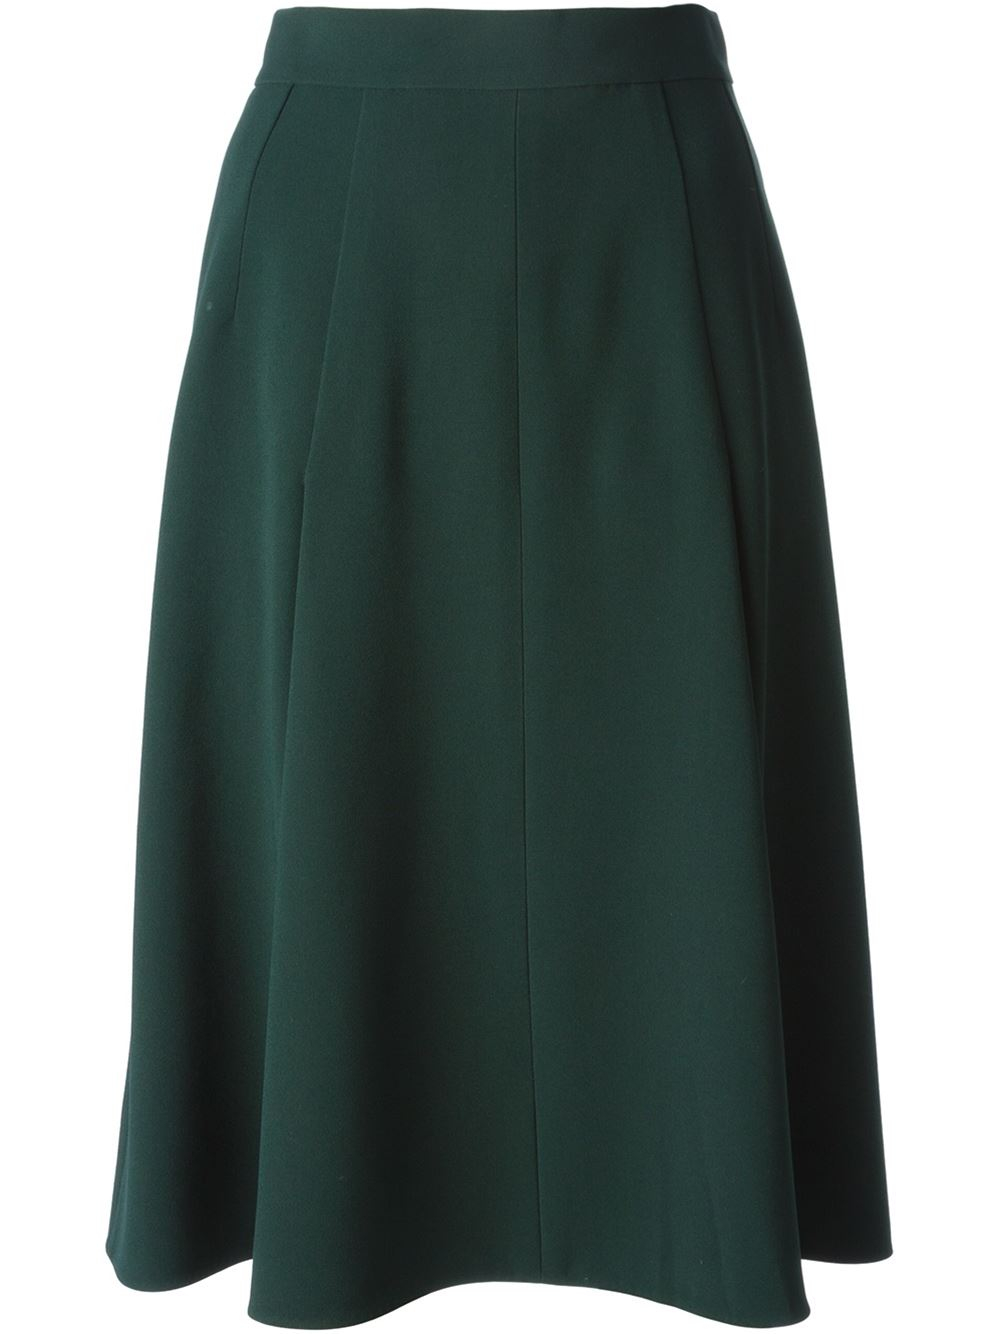 Lyst - Dolce & gabbana Soft Pleats Skirt in Green